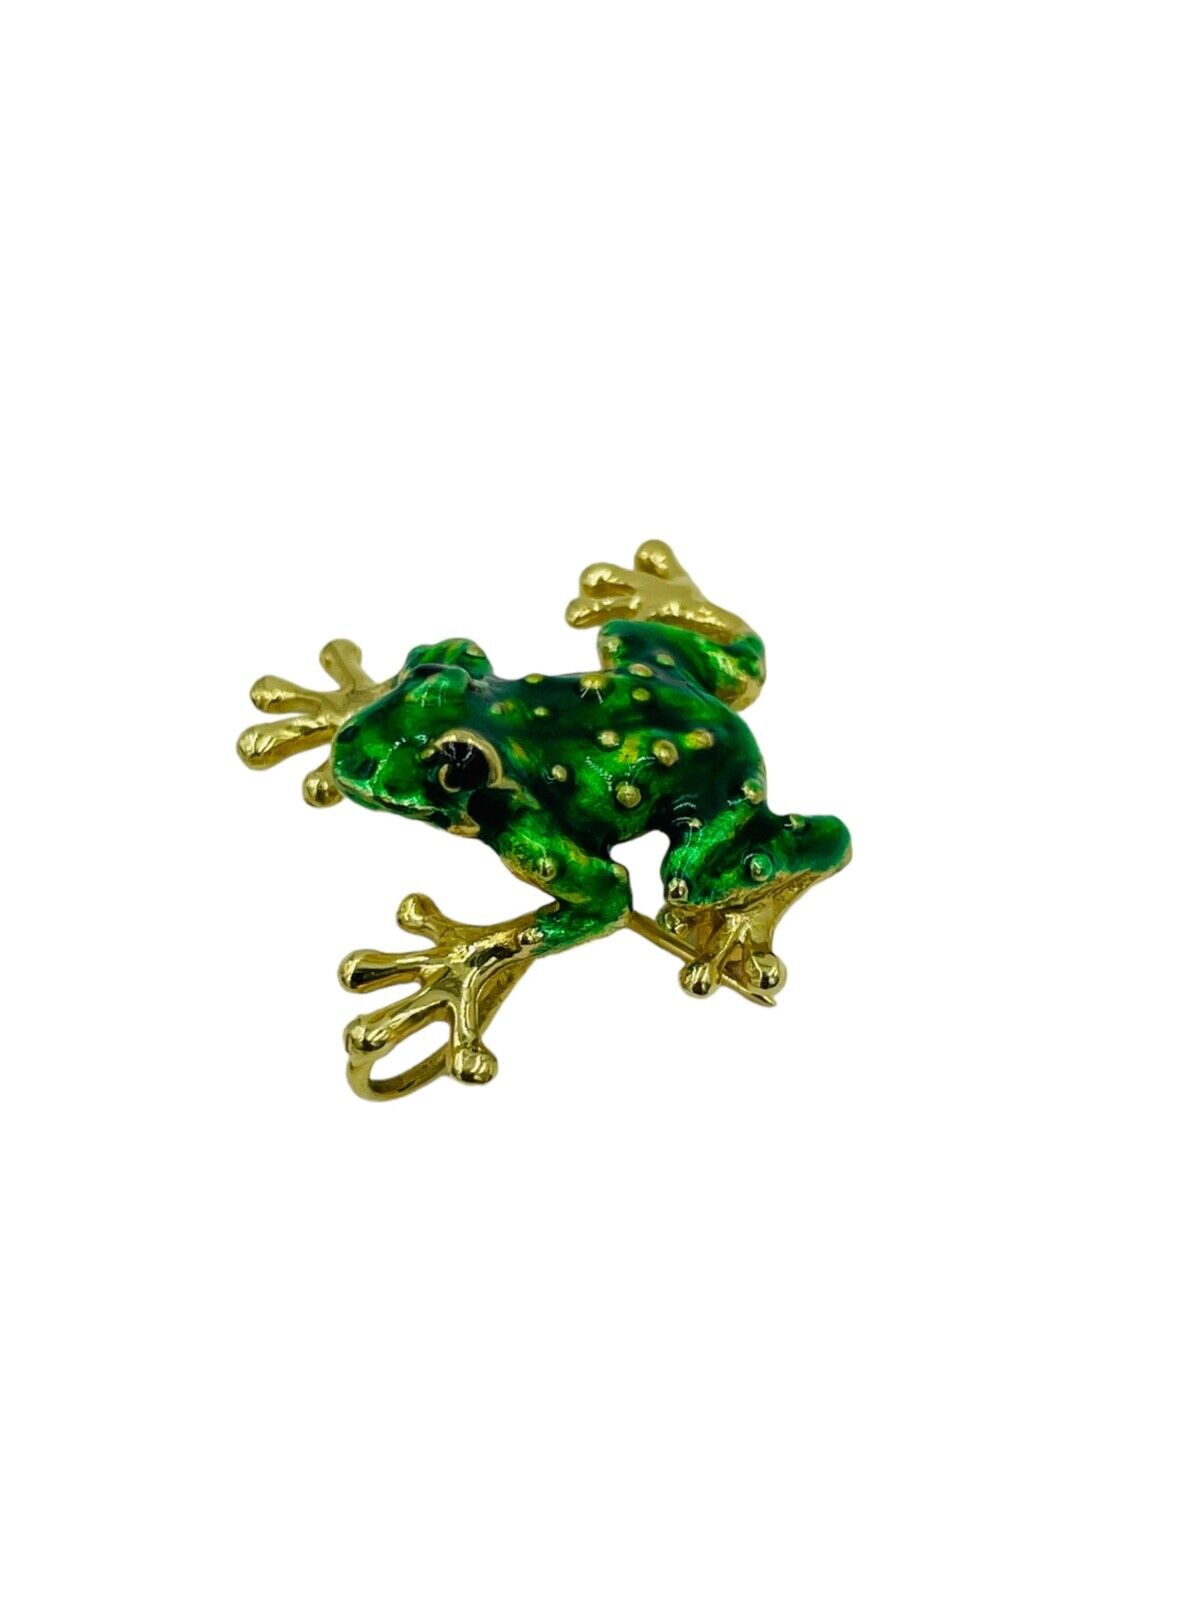 Vintage Green Frog Brooch Pin  Pendant  14K Yellow Gold Enamel